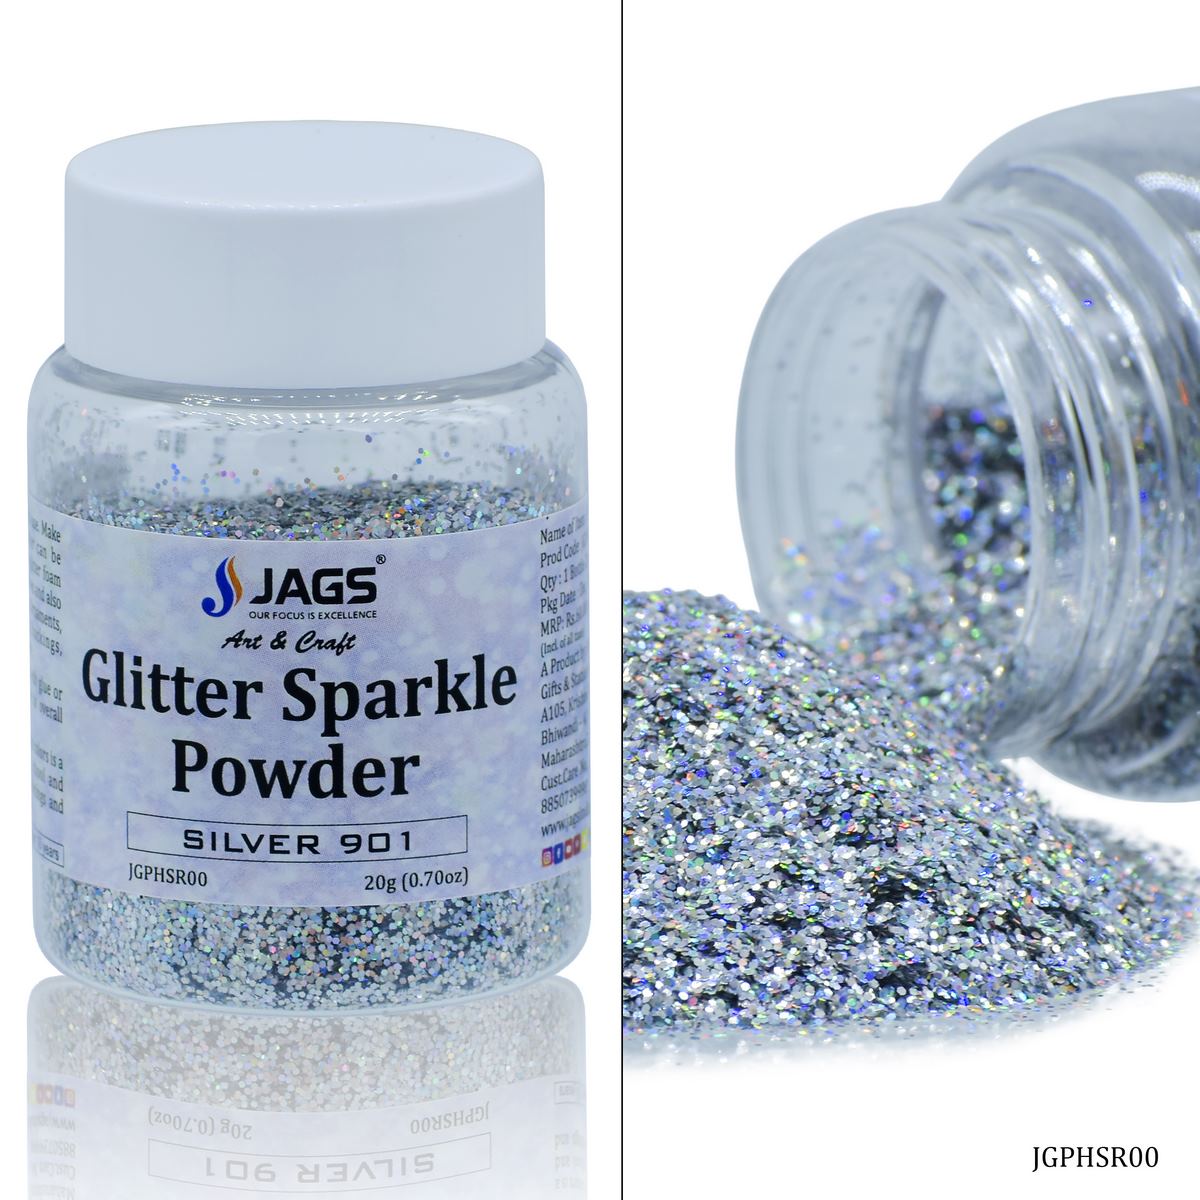 jags-mumbai Glitter Powder Jags Glitter Sparkle Powder Silver 901 20gm JGPHSR00